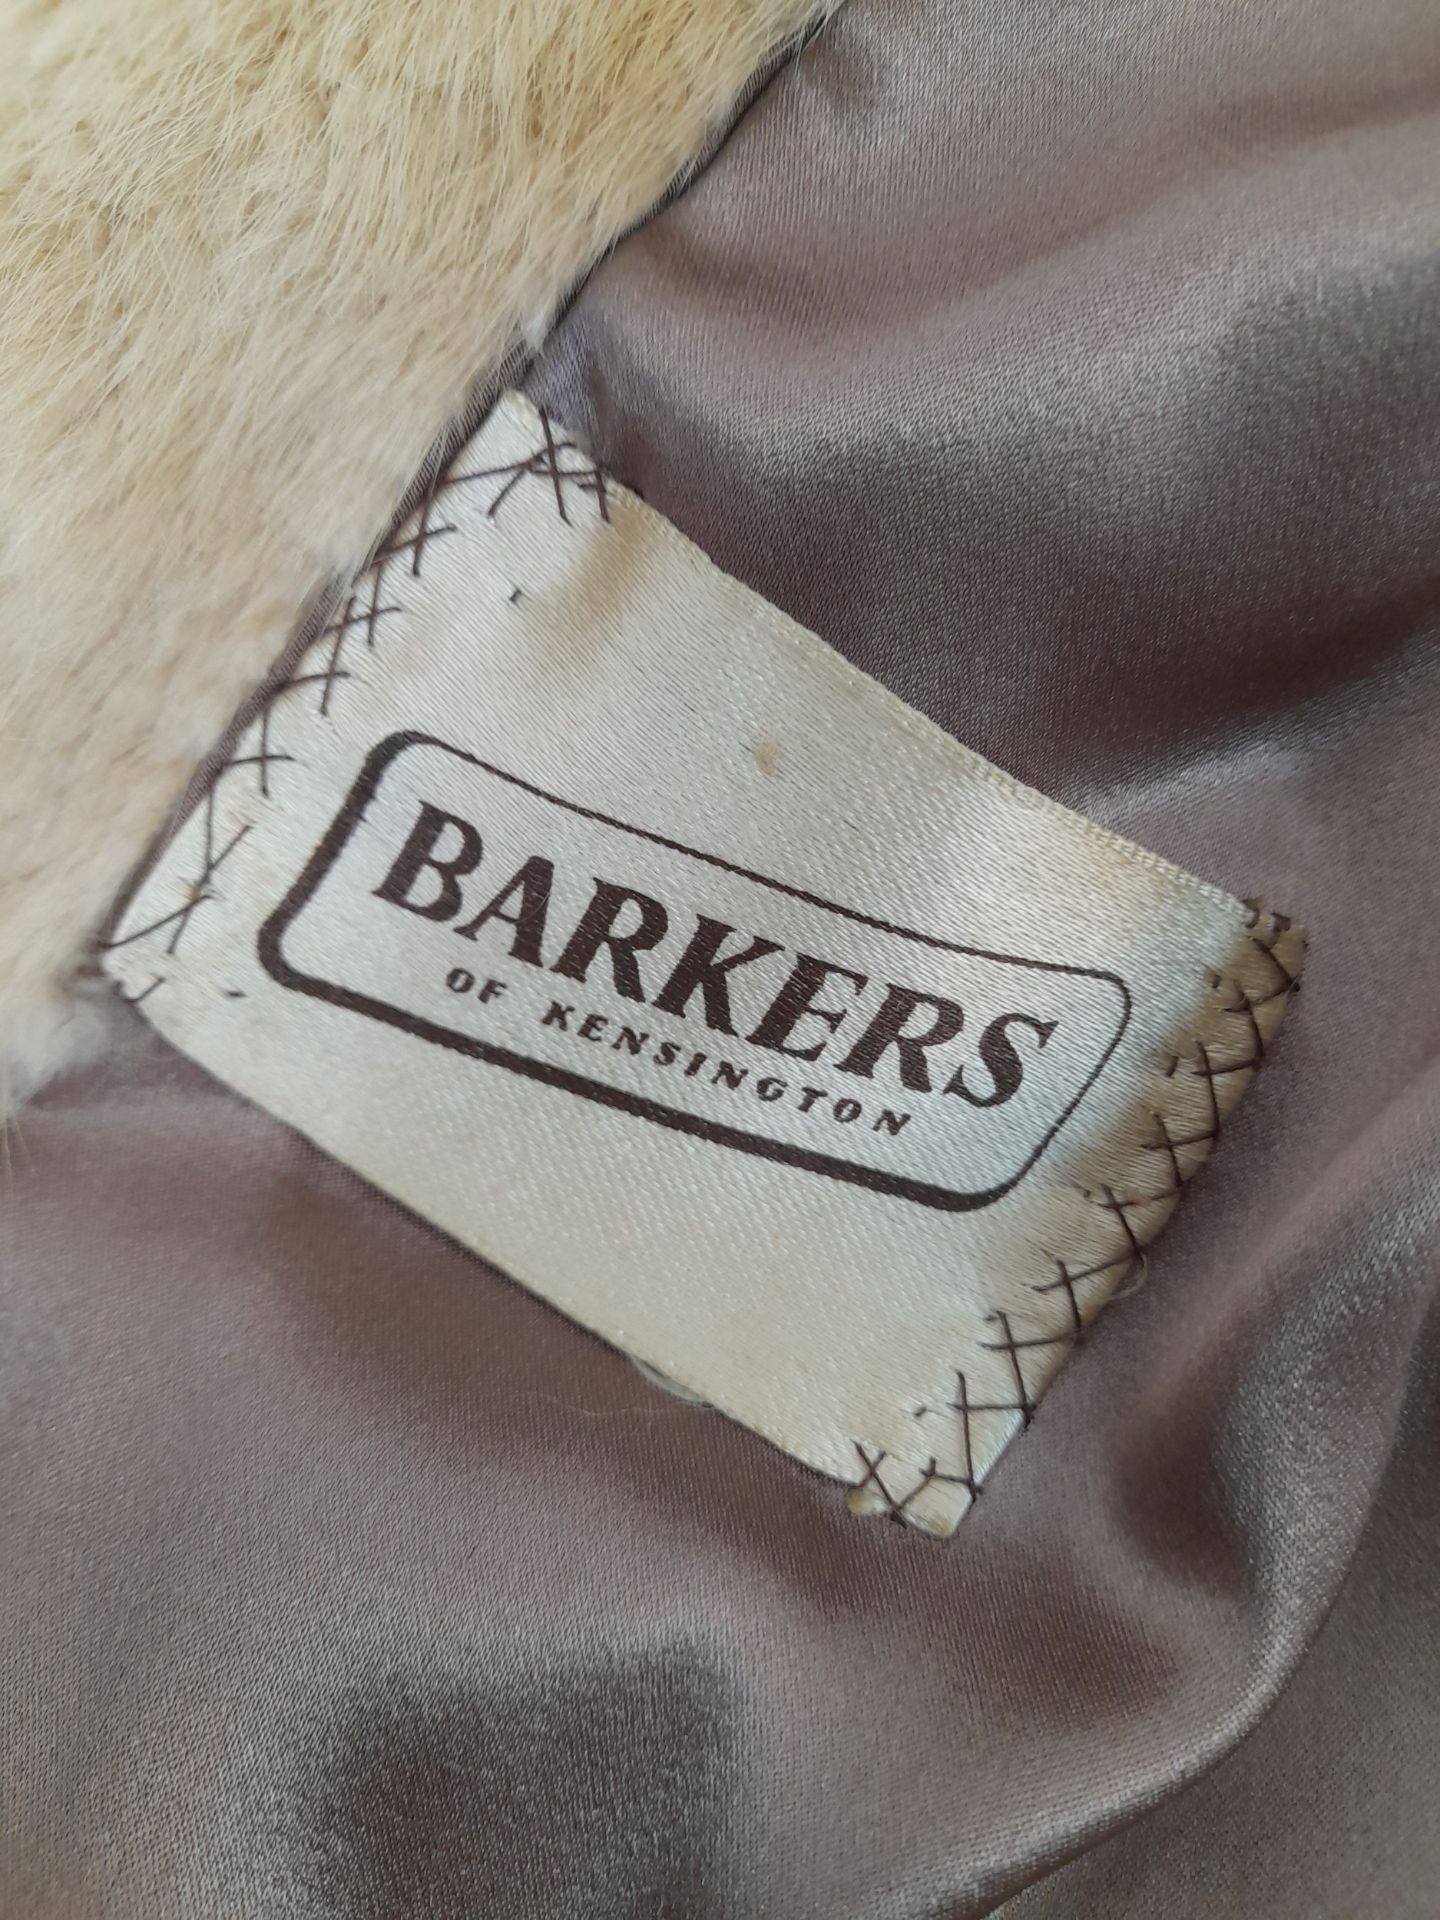 A Barkers of Kensington Three-Quarter Length White Fur Coat. - Image 7 of 8